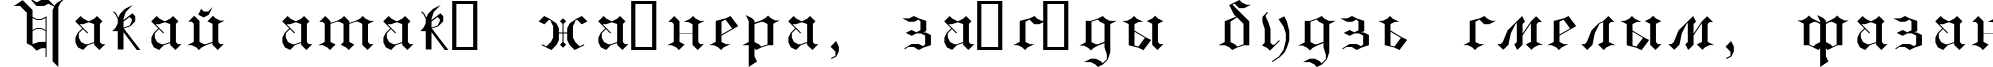 Пример написания шрифтом GothicE текста на белорусском